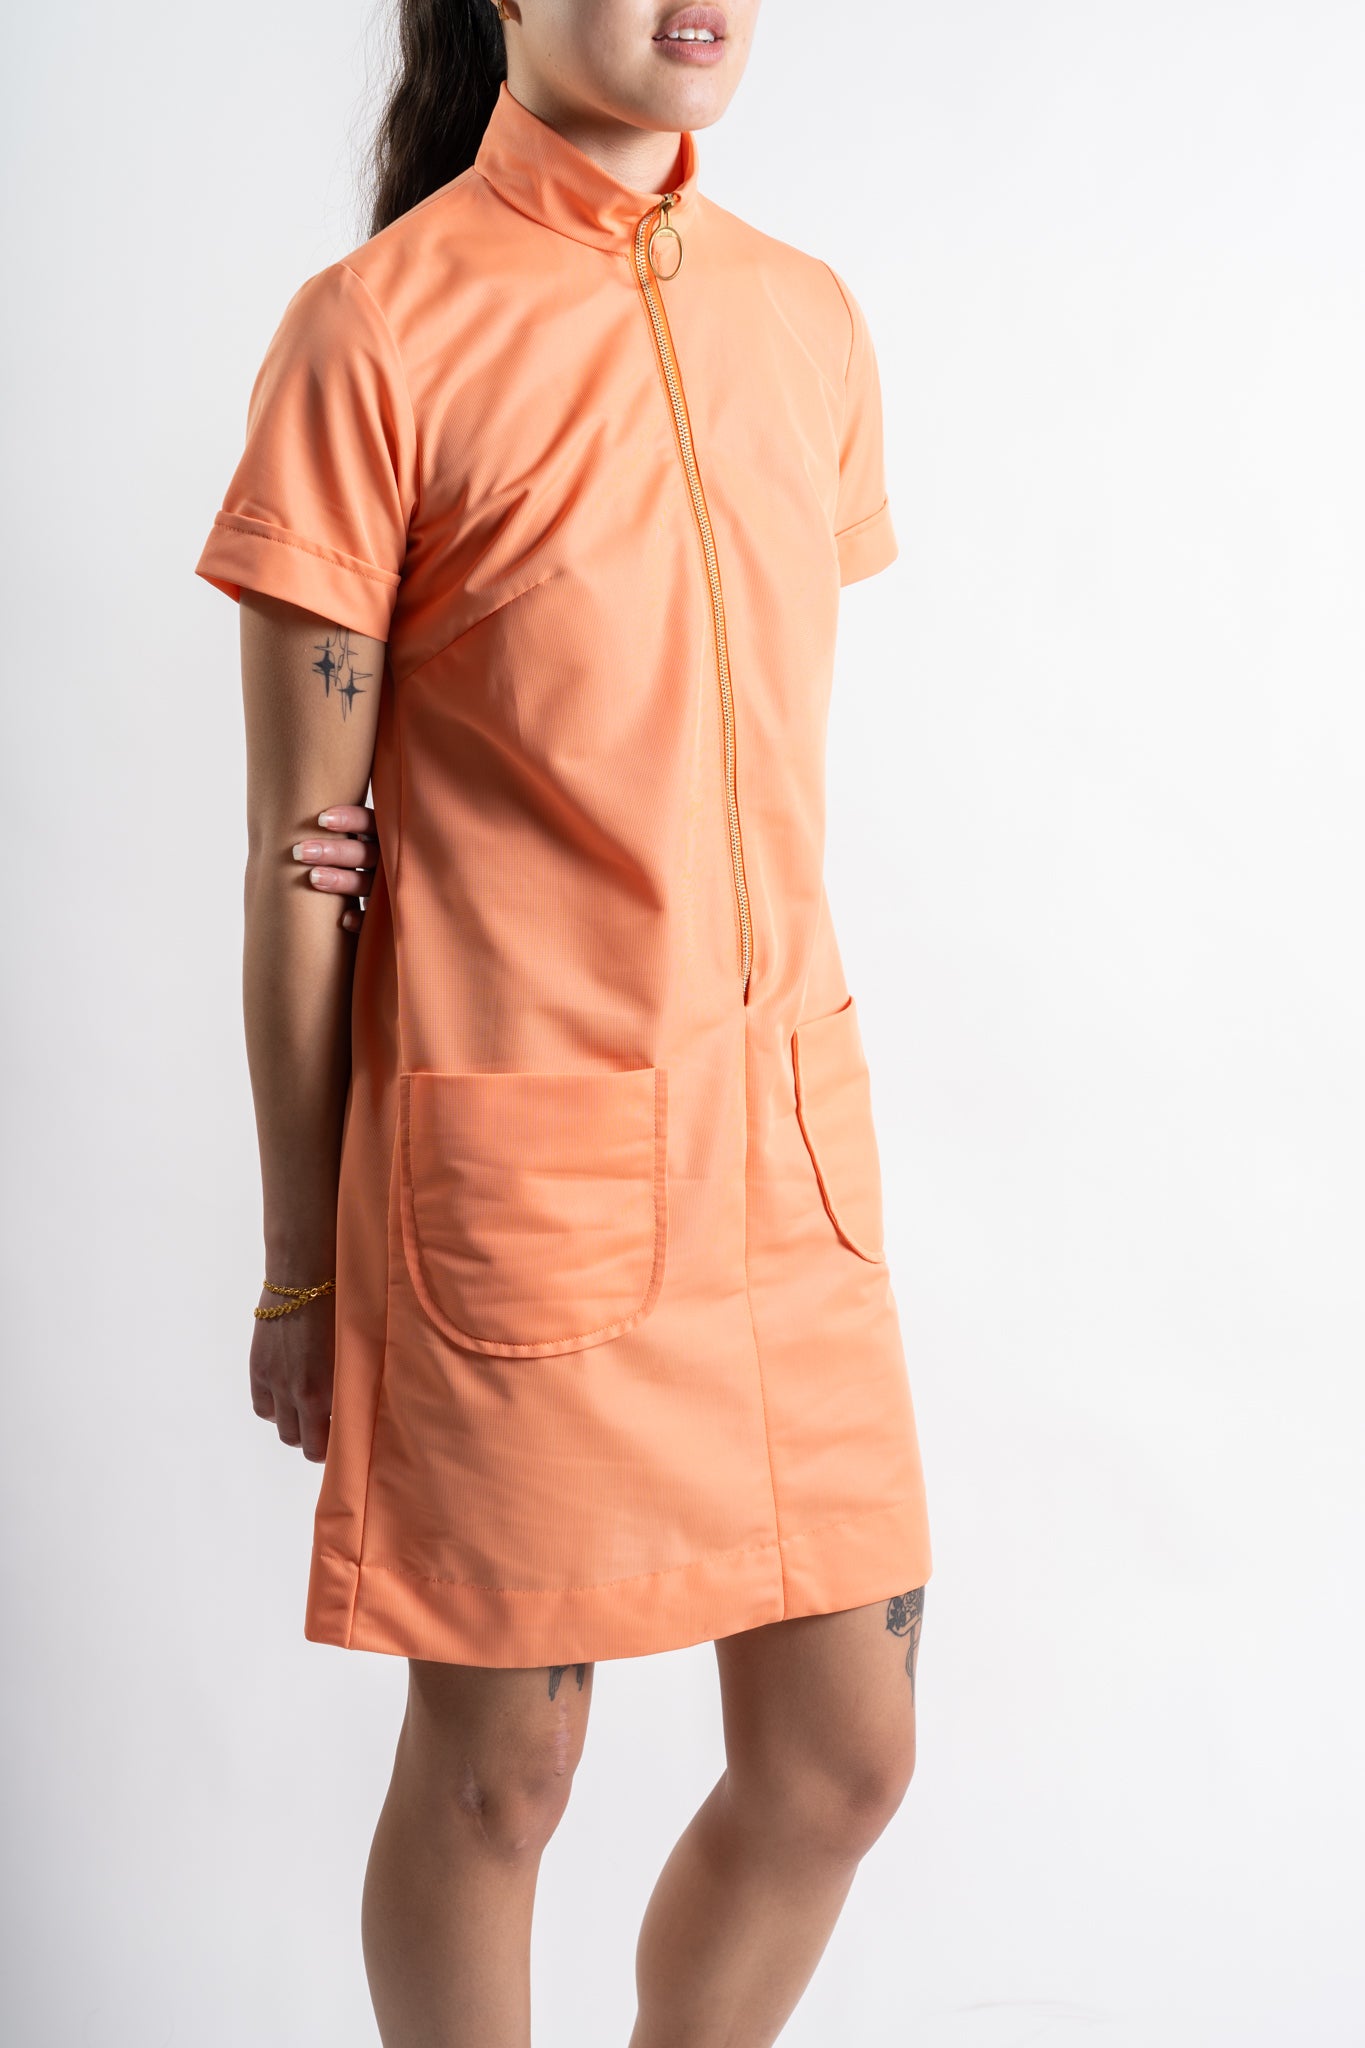 Orange Zipper Dress - M